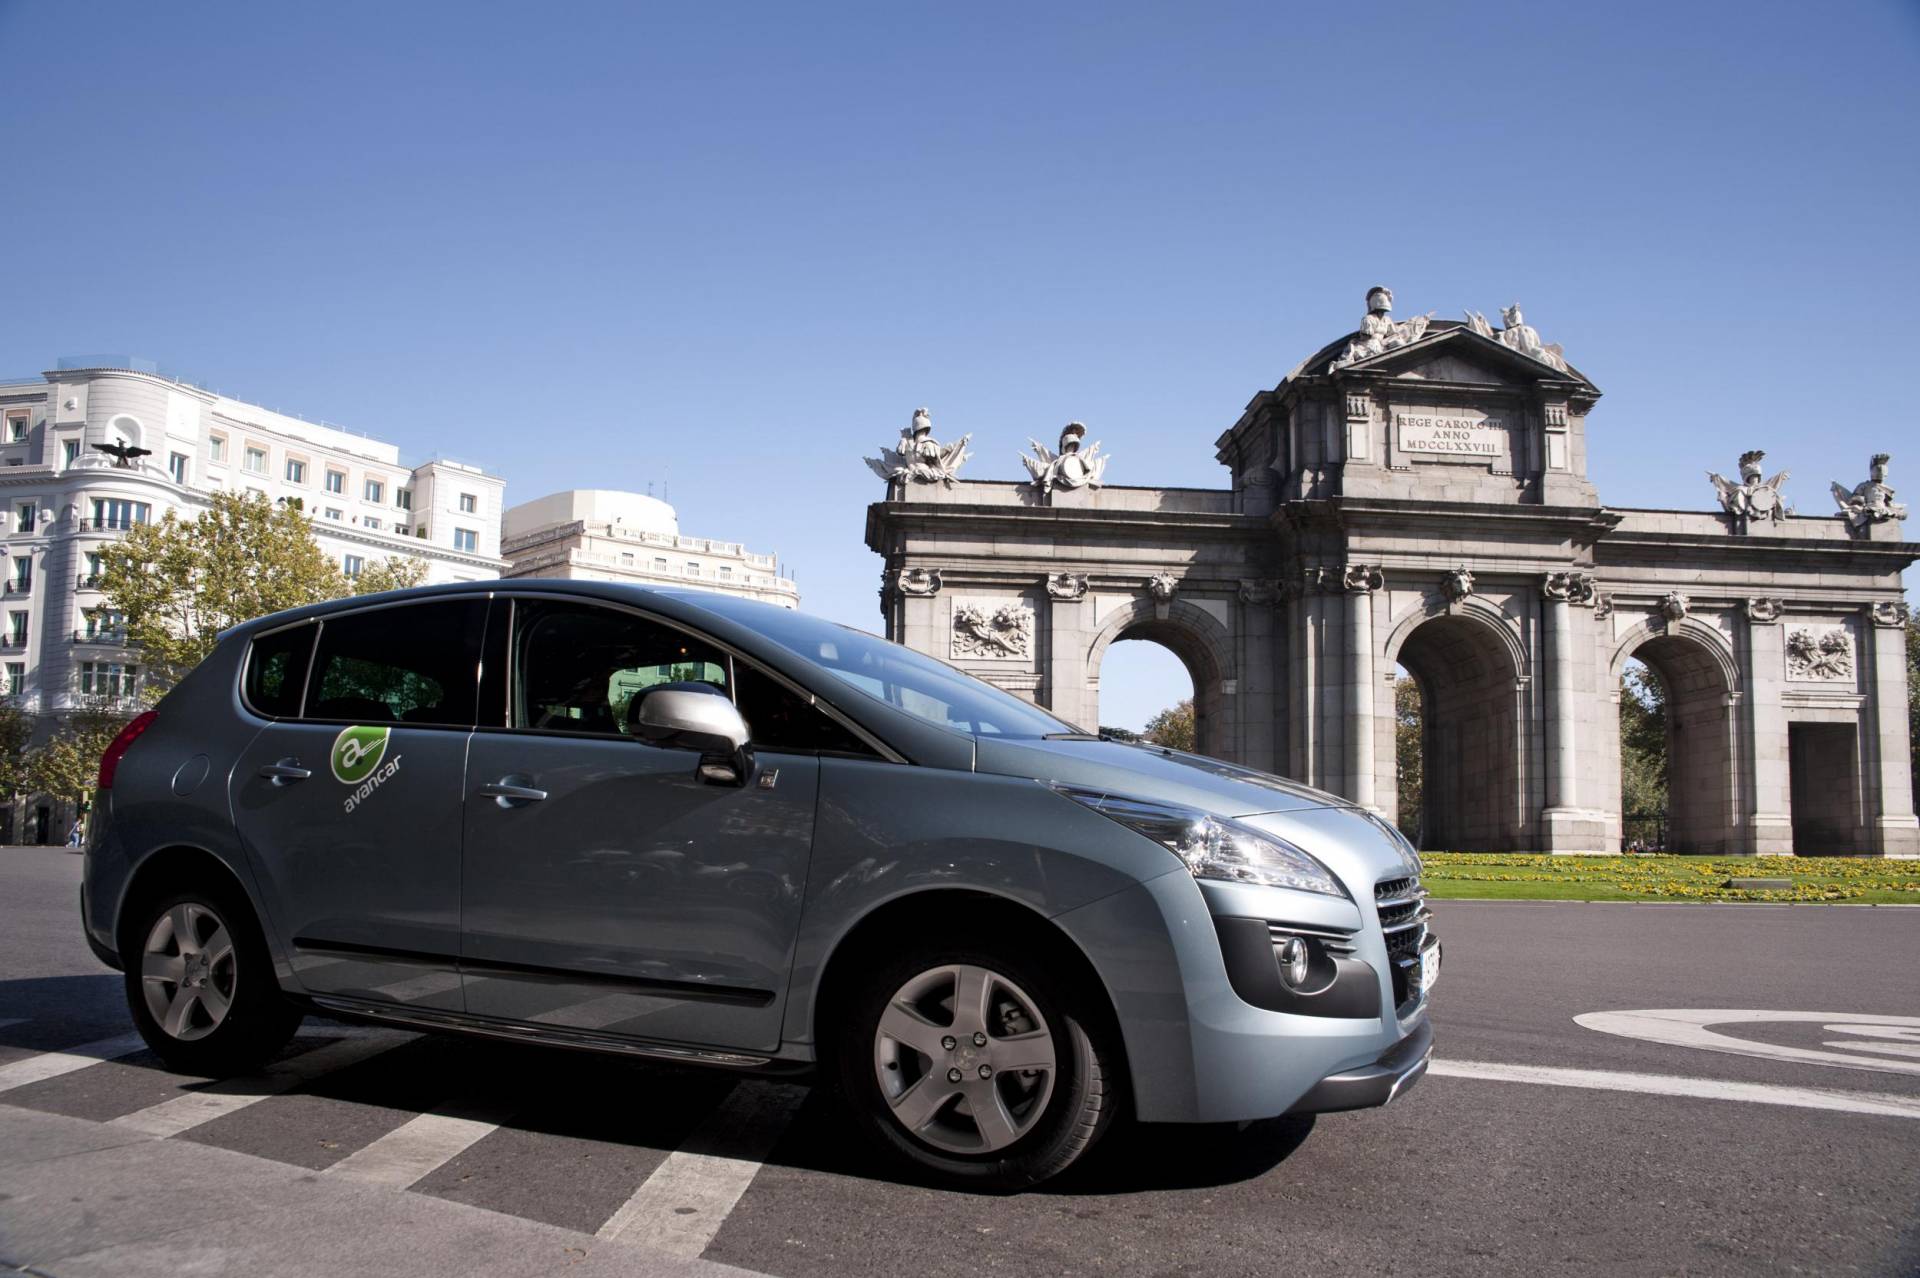 Avancar cierra en Madrid en pleno auge del 'carsharing'